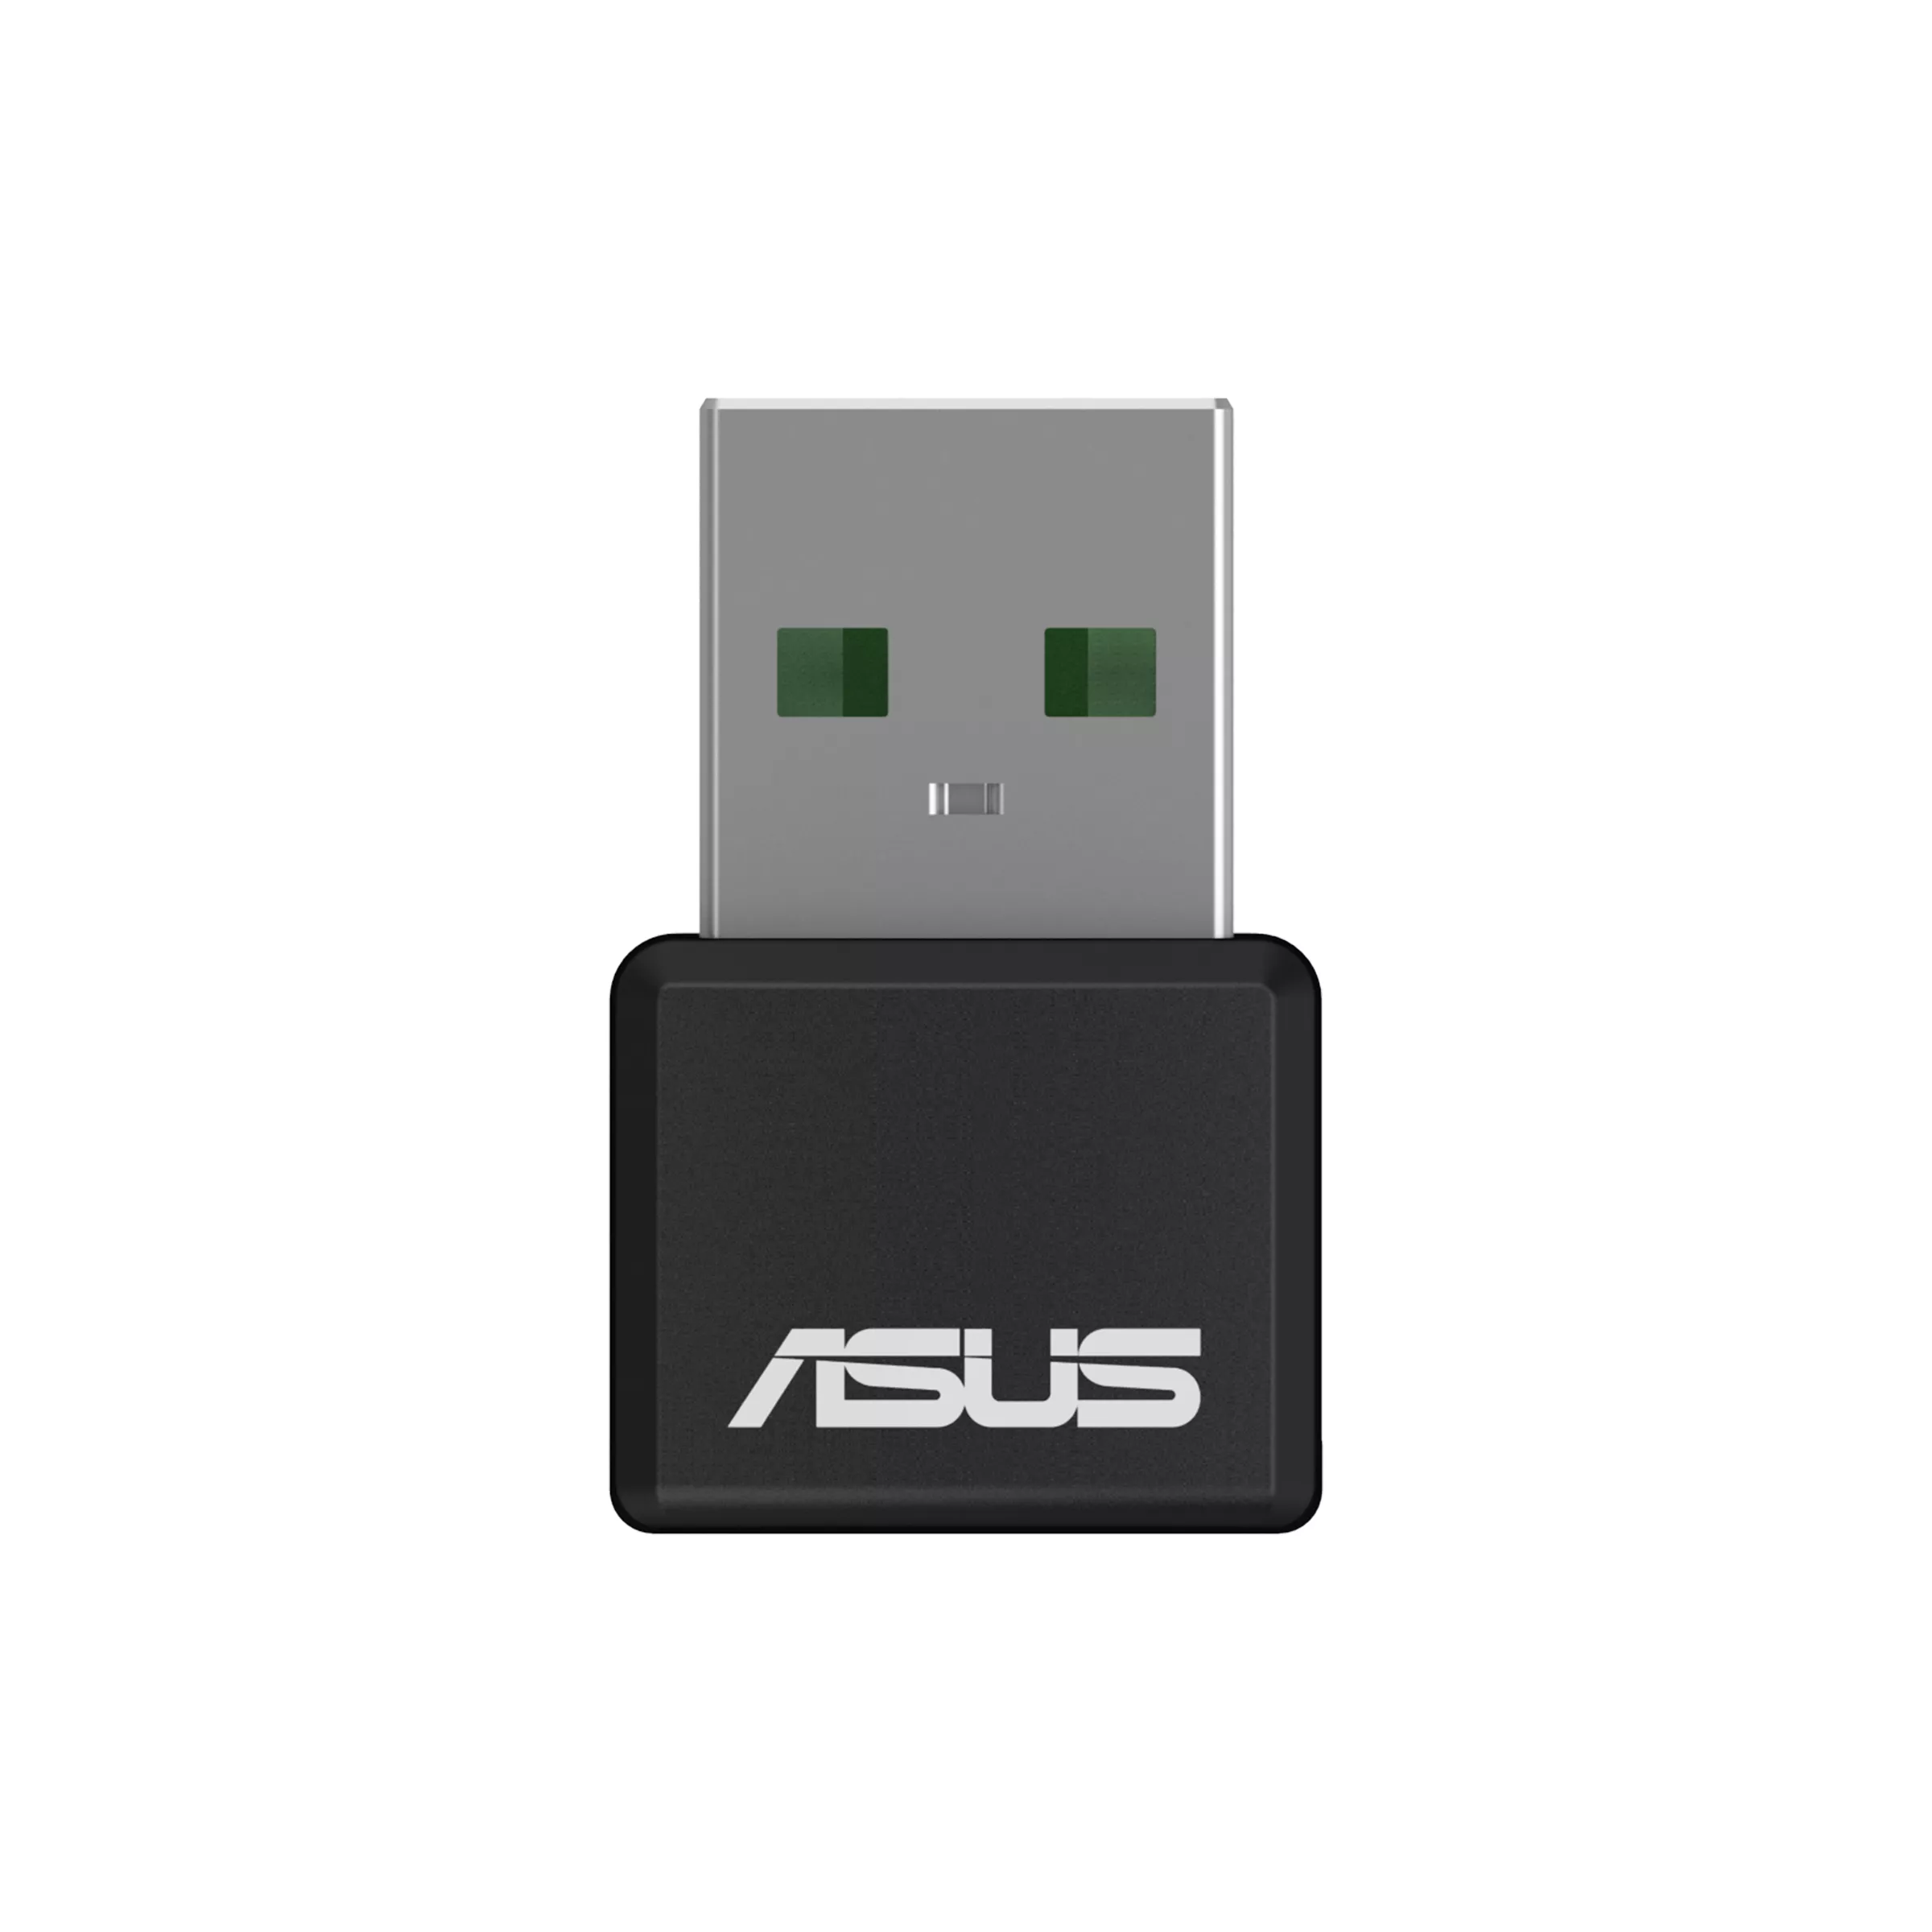 Revendeur officiel ASUS USB-AX55 Nano Dual Band Wireless AX1800 USB